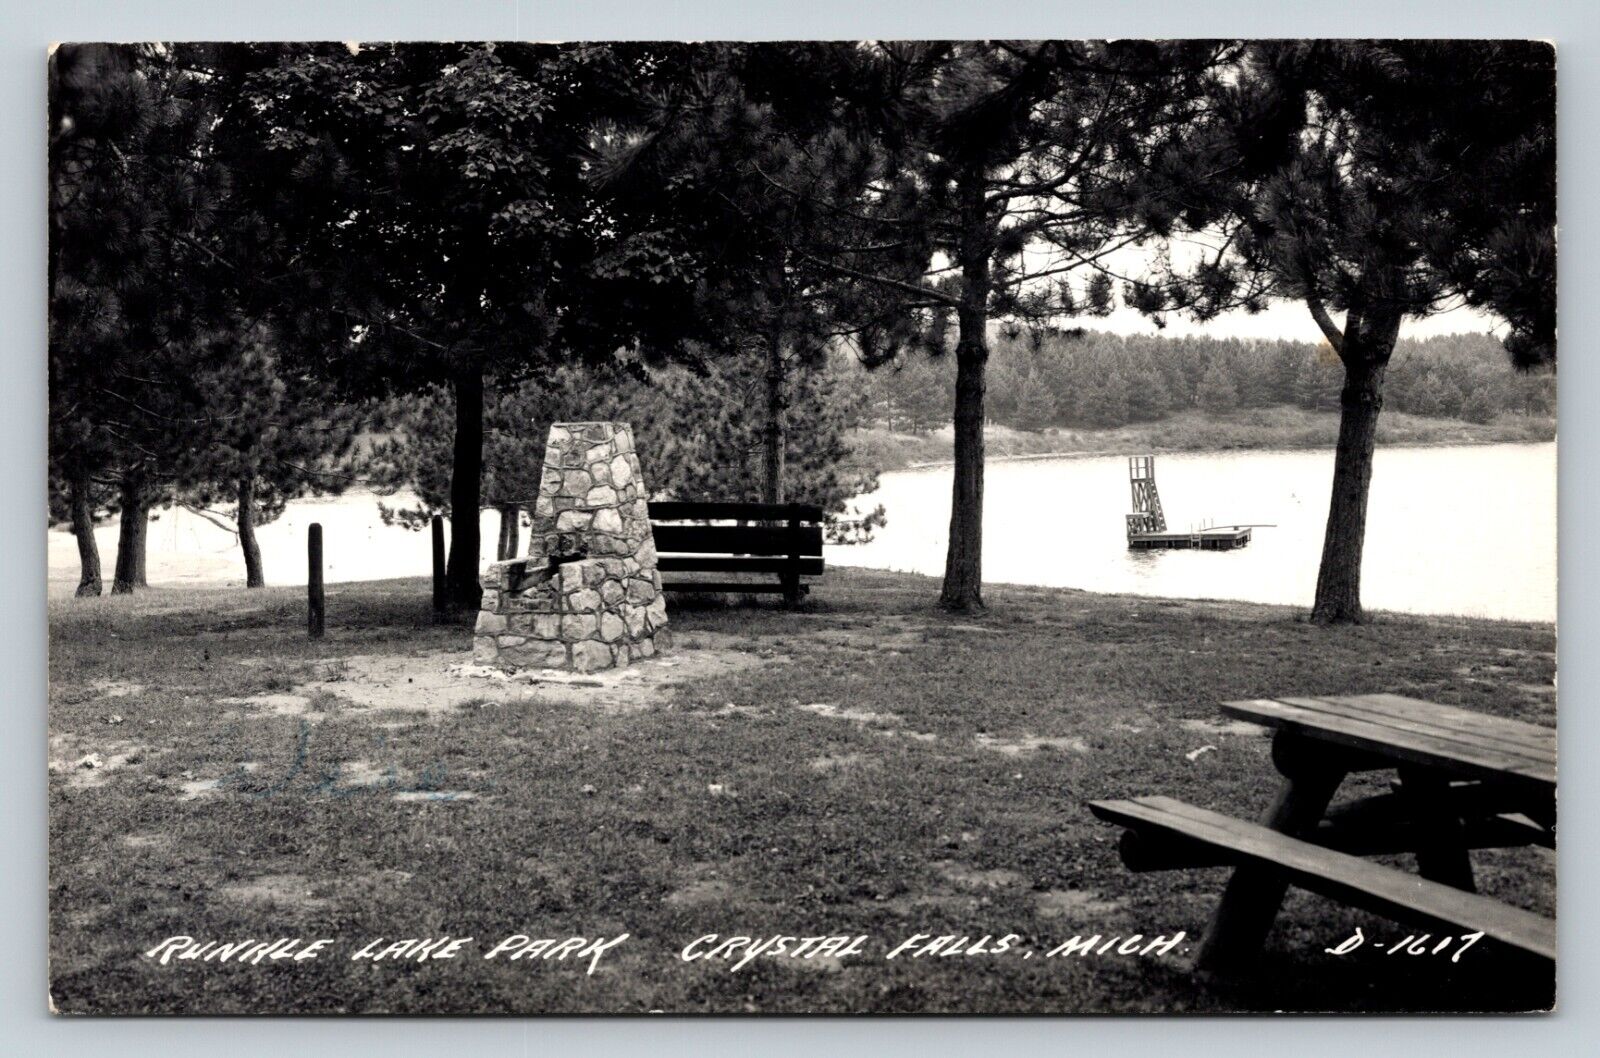 c1951 RPPC Runkle Lake Park CRYSTAL FALLS Michigan VINTAGE Real Photo Postcard